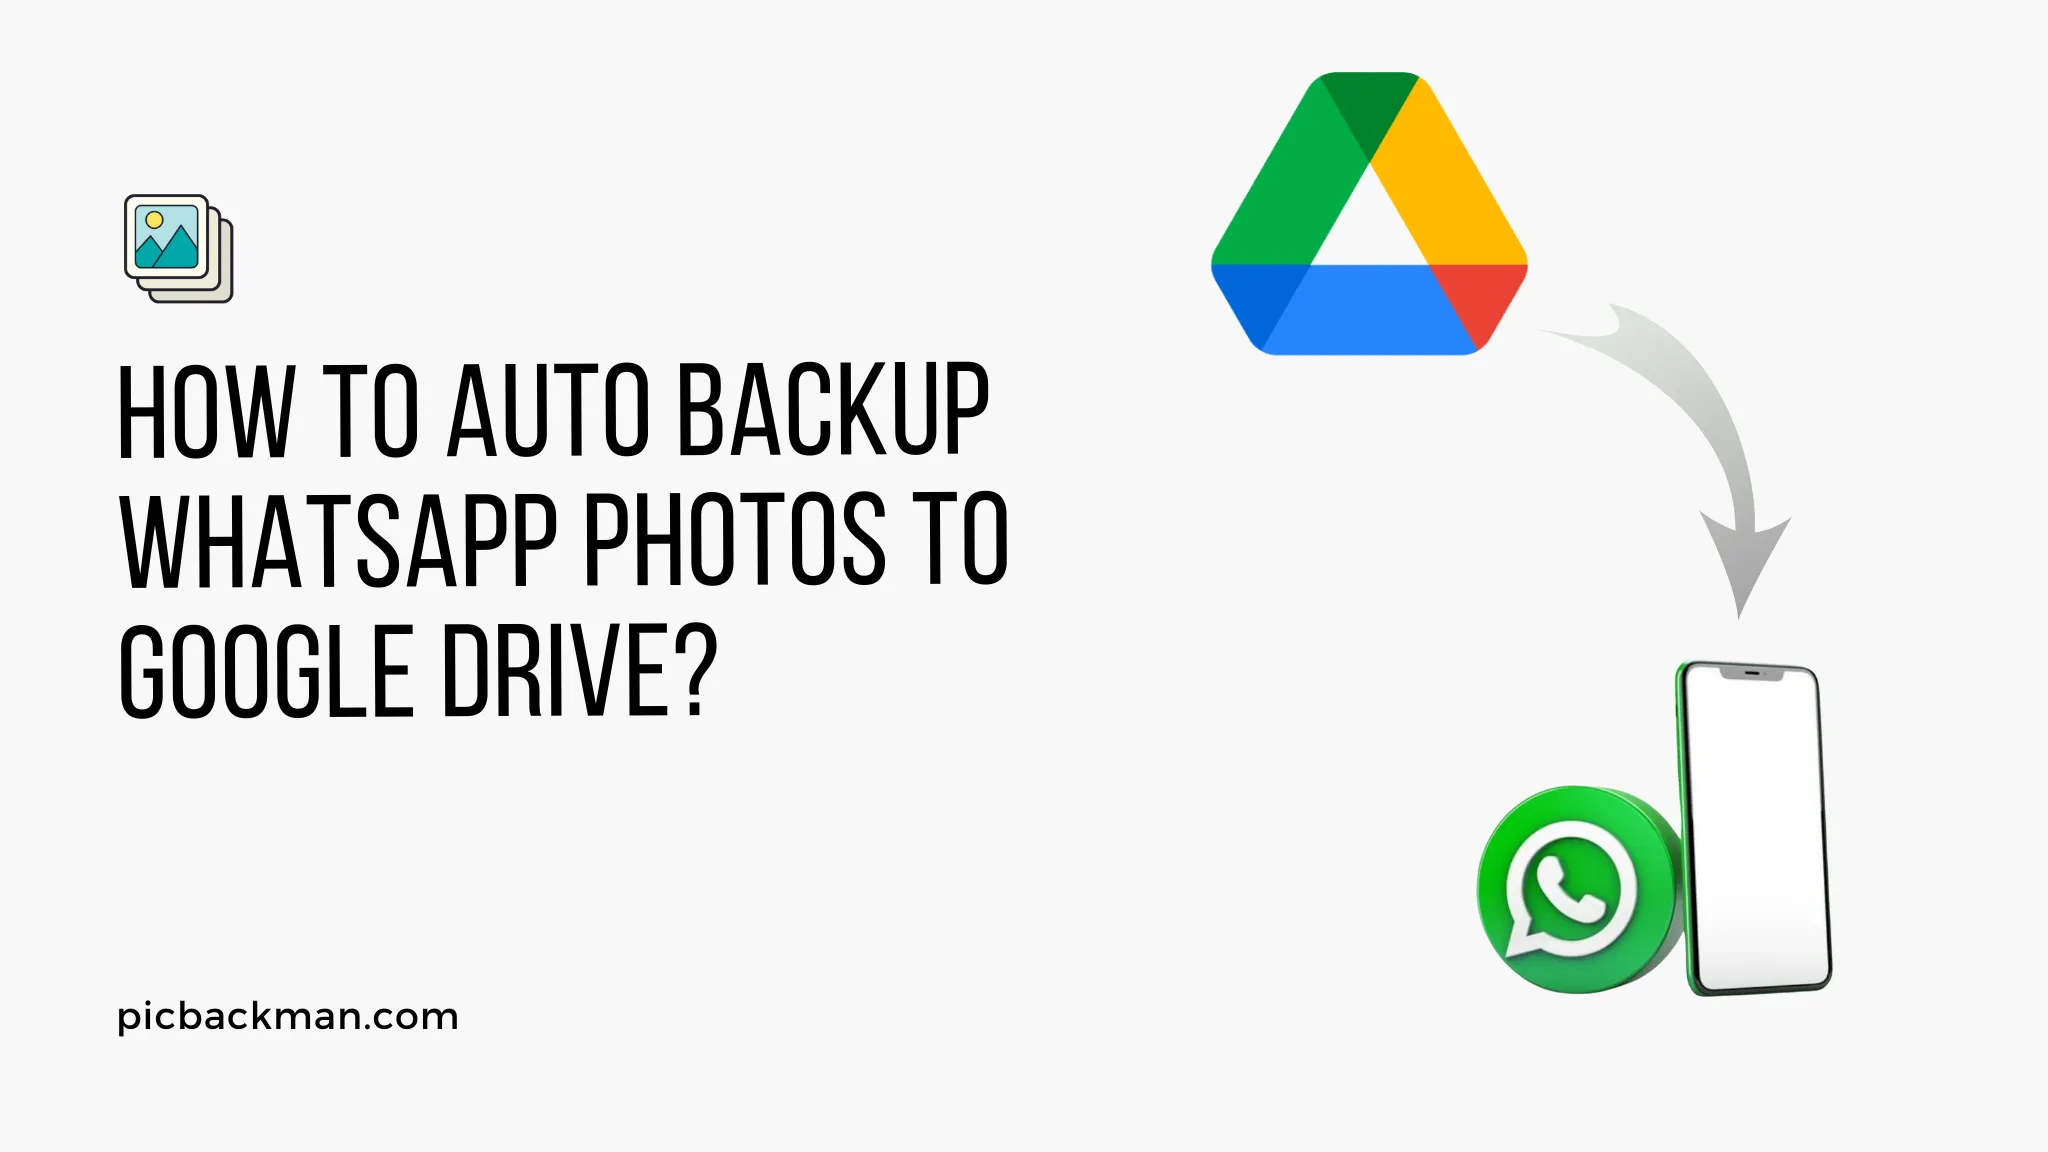 How to Auto Backup WhatsApp Photos to Google Drive